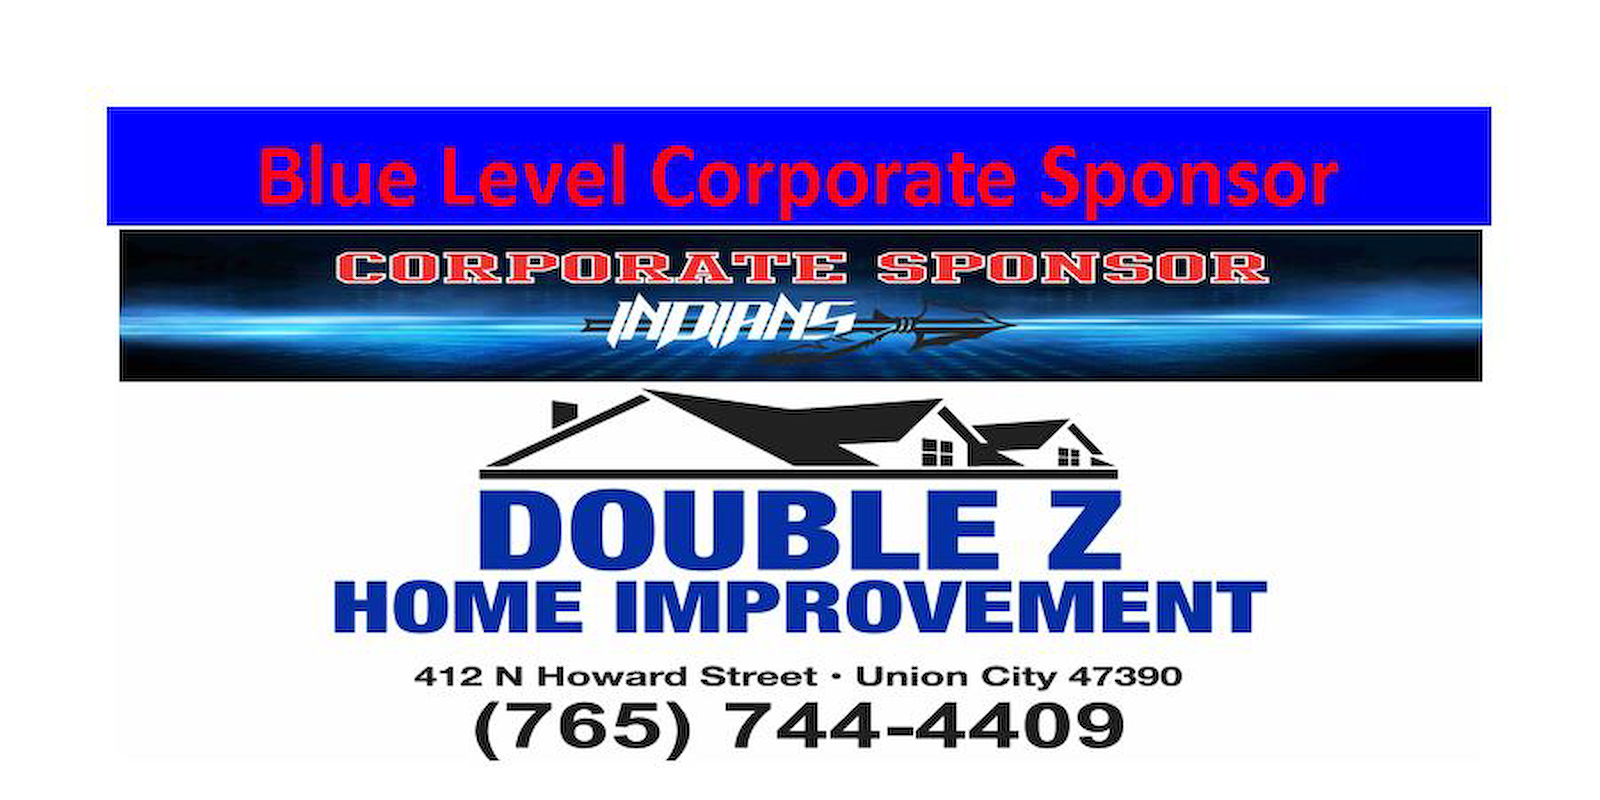 Double Z Home Improvement